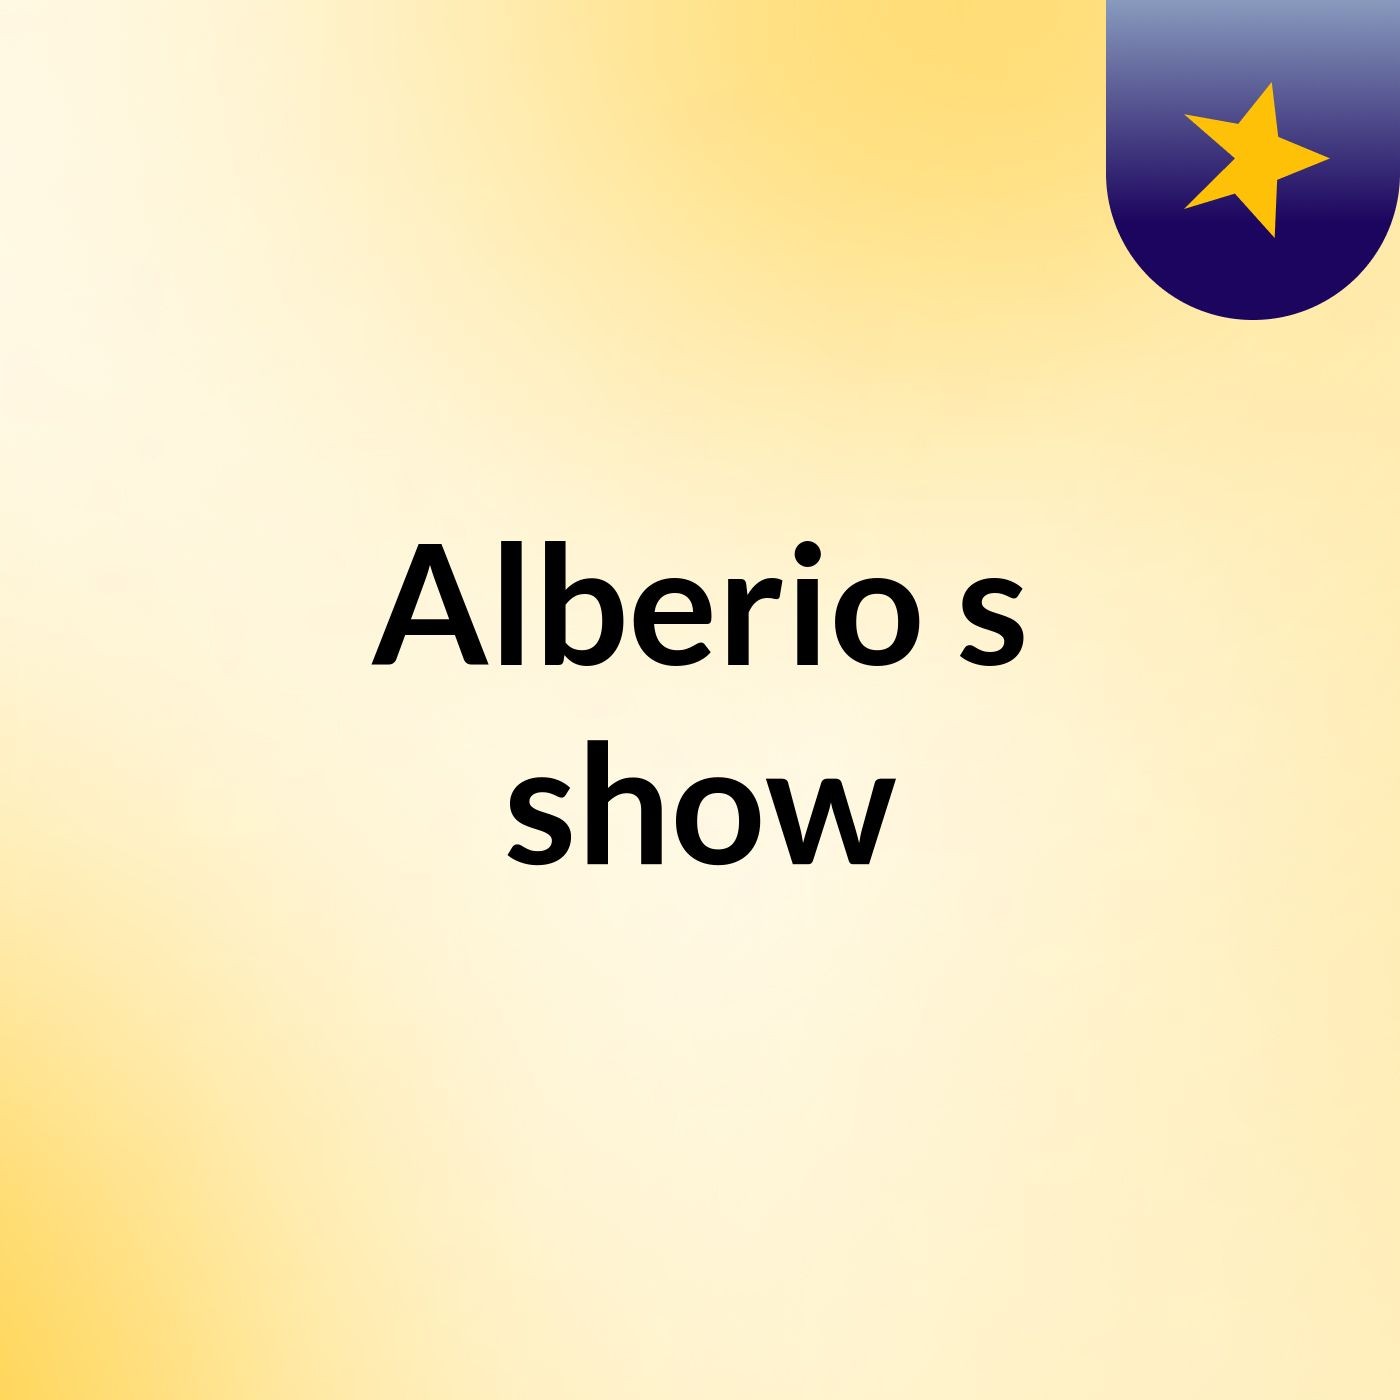 Alberio's show